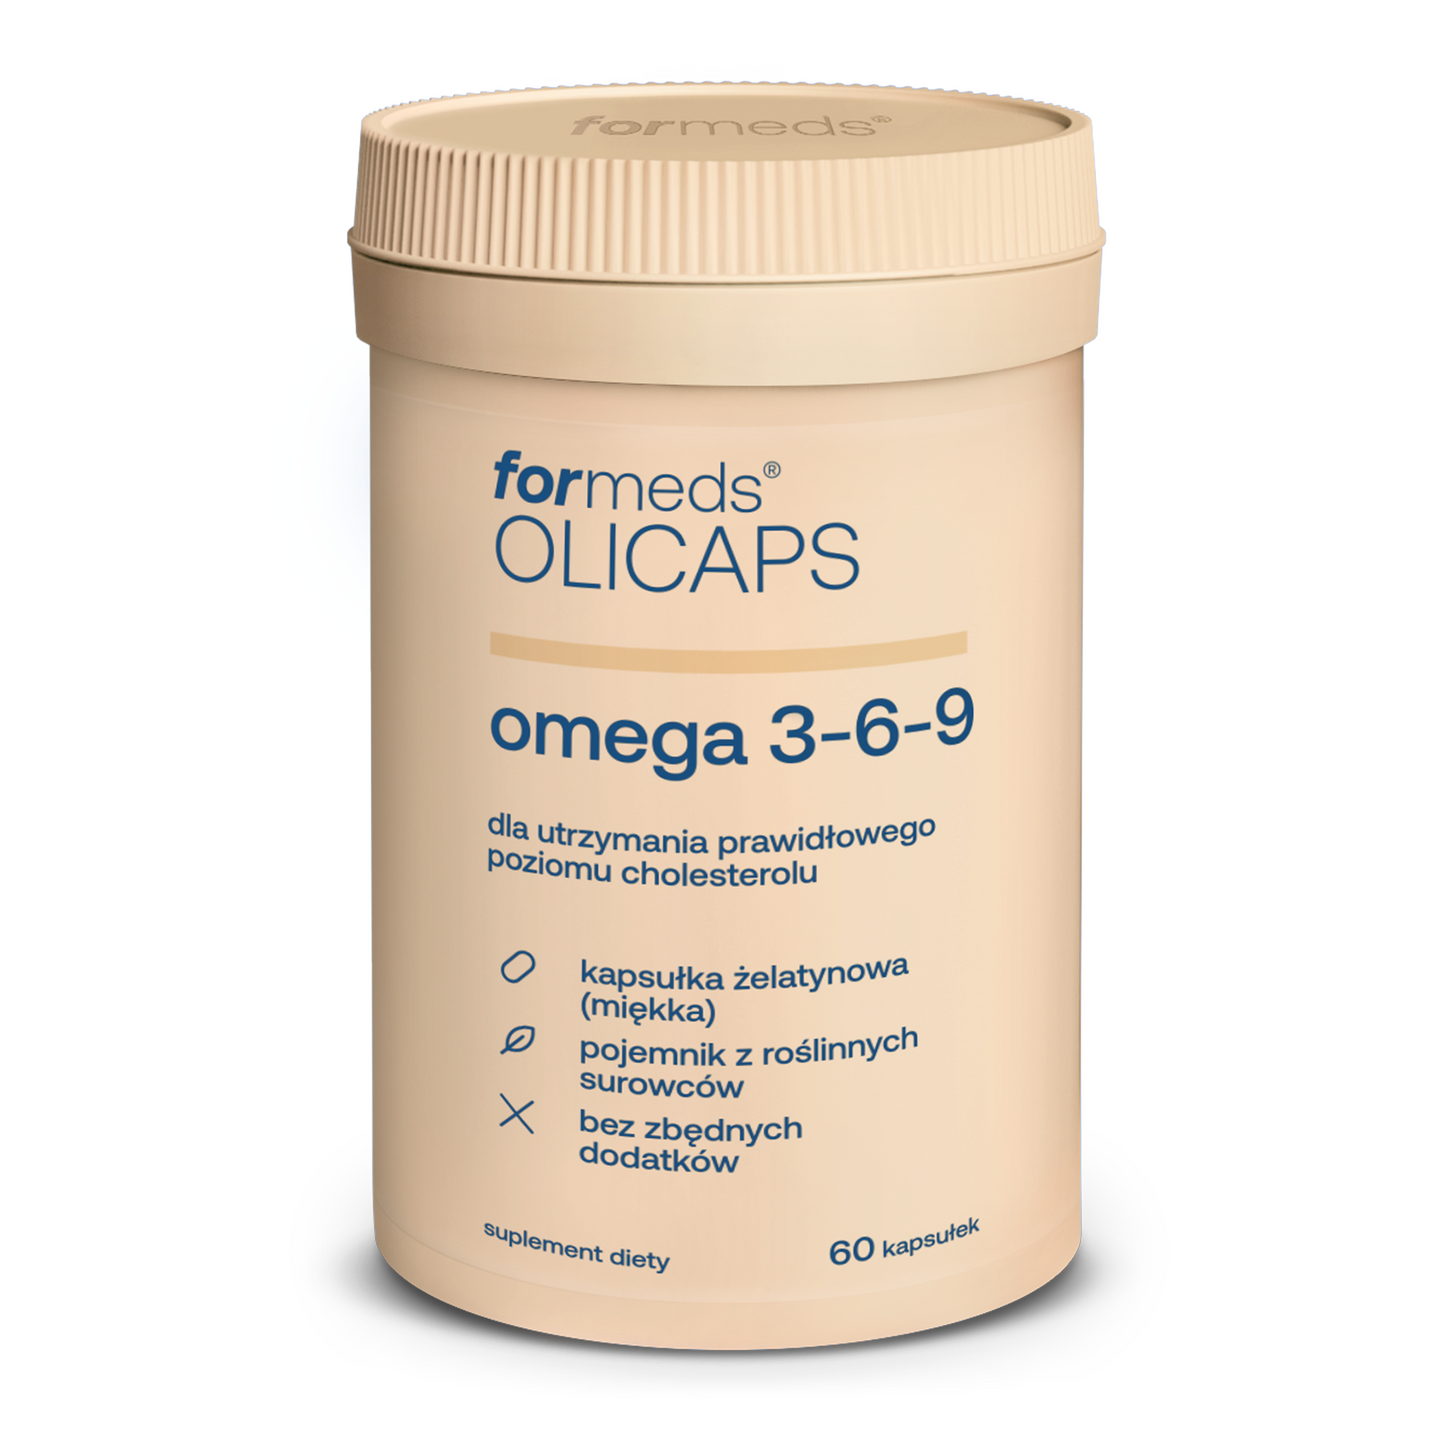 OLICAPS Omega 3-6-9 tabletki, kapsułki